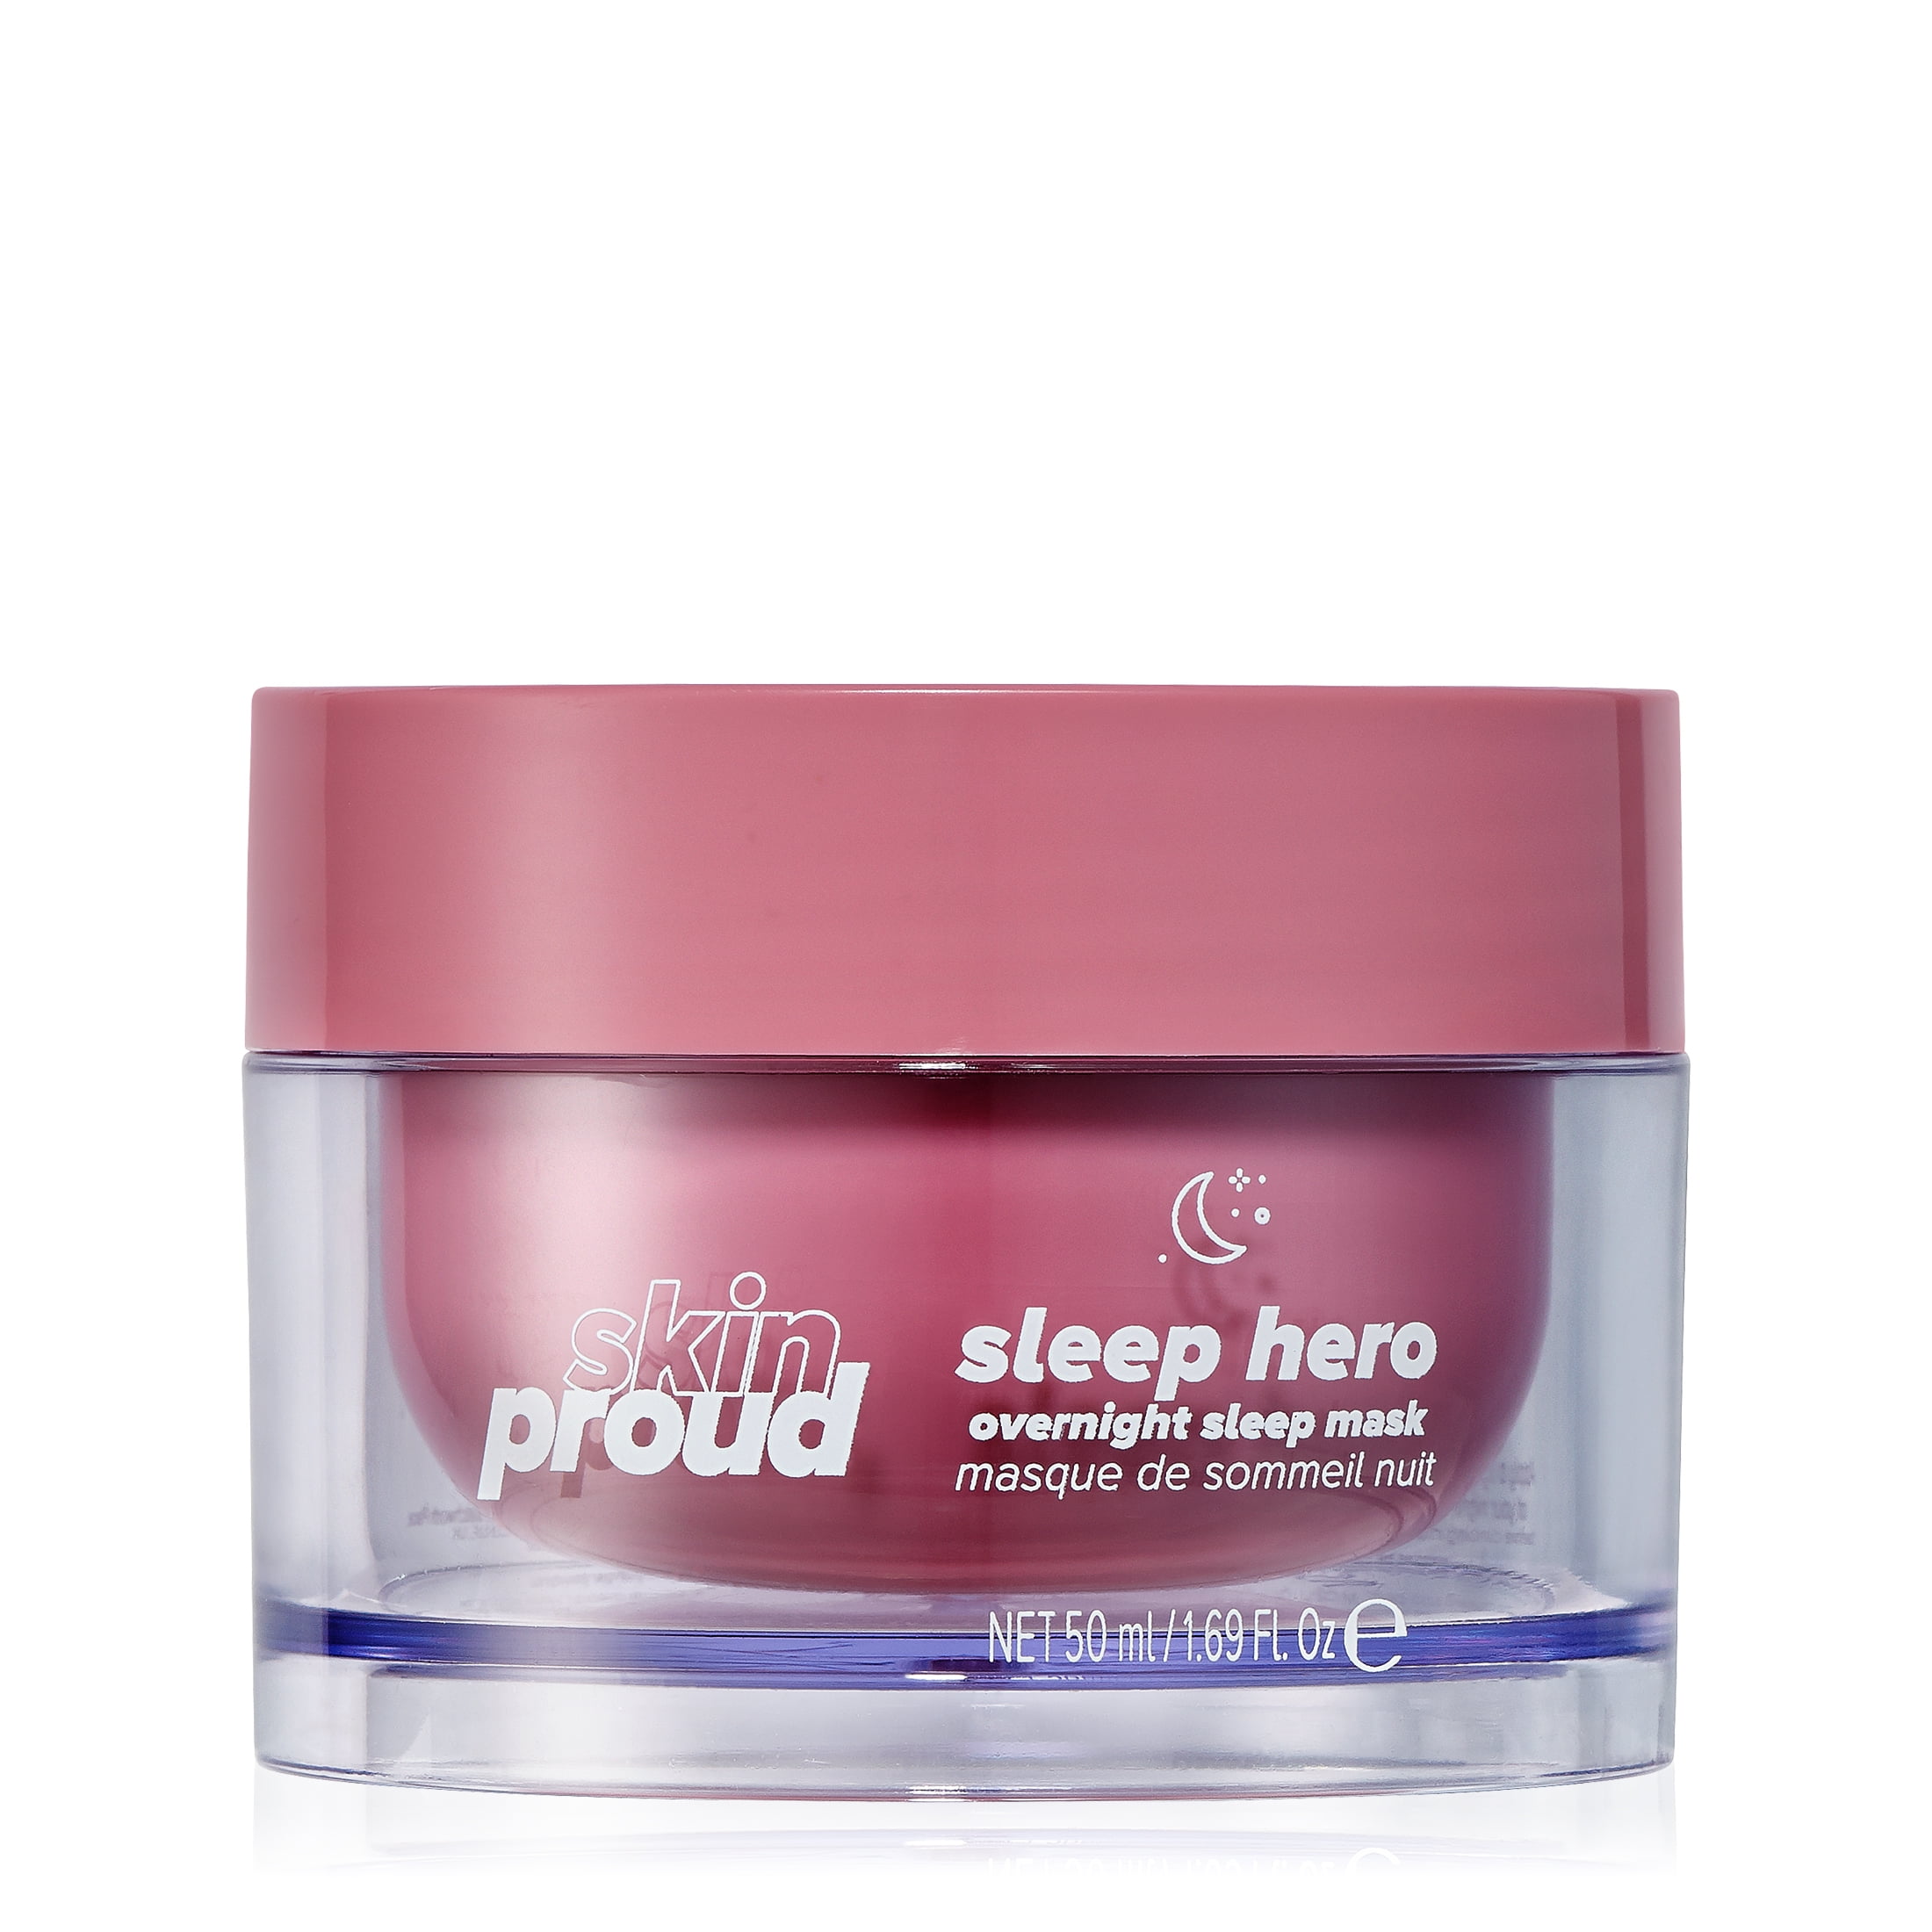 Skin Proud Sleep Hero, Overnight Sleep Face Mask with Balancing Niacinamide, 100% Vegan, 1.69 fl oz